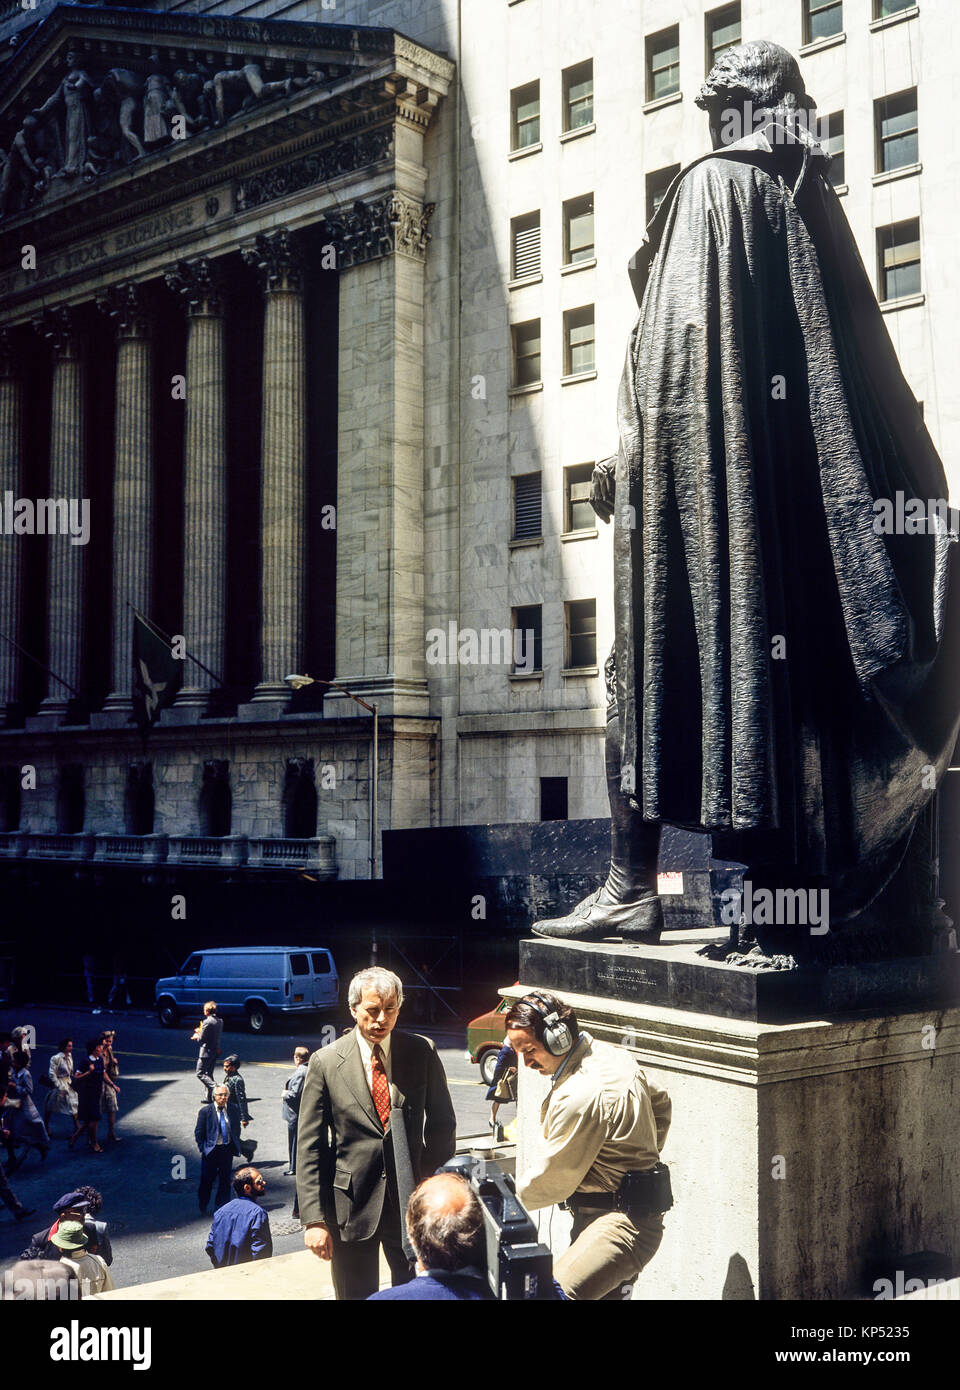 May 1982,New York,TV crew,interview,George Washington statue,Stock Exchange building facade,Broad street,Manhattan,New york City,NY,NYC,USA, Stock Photo